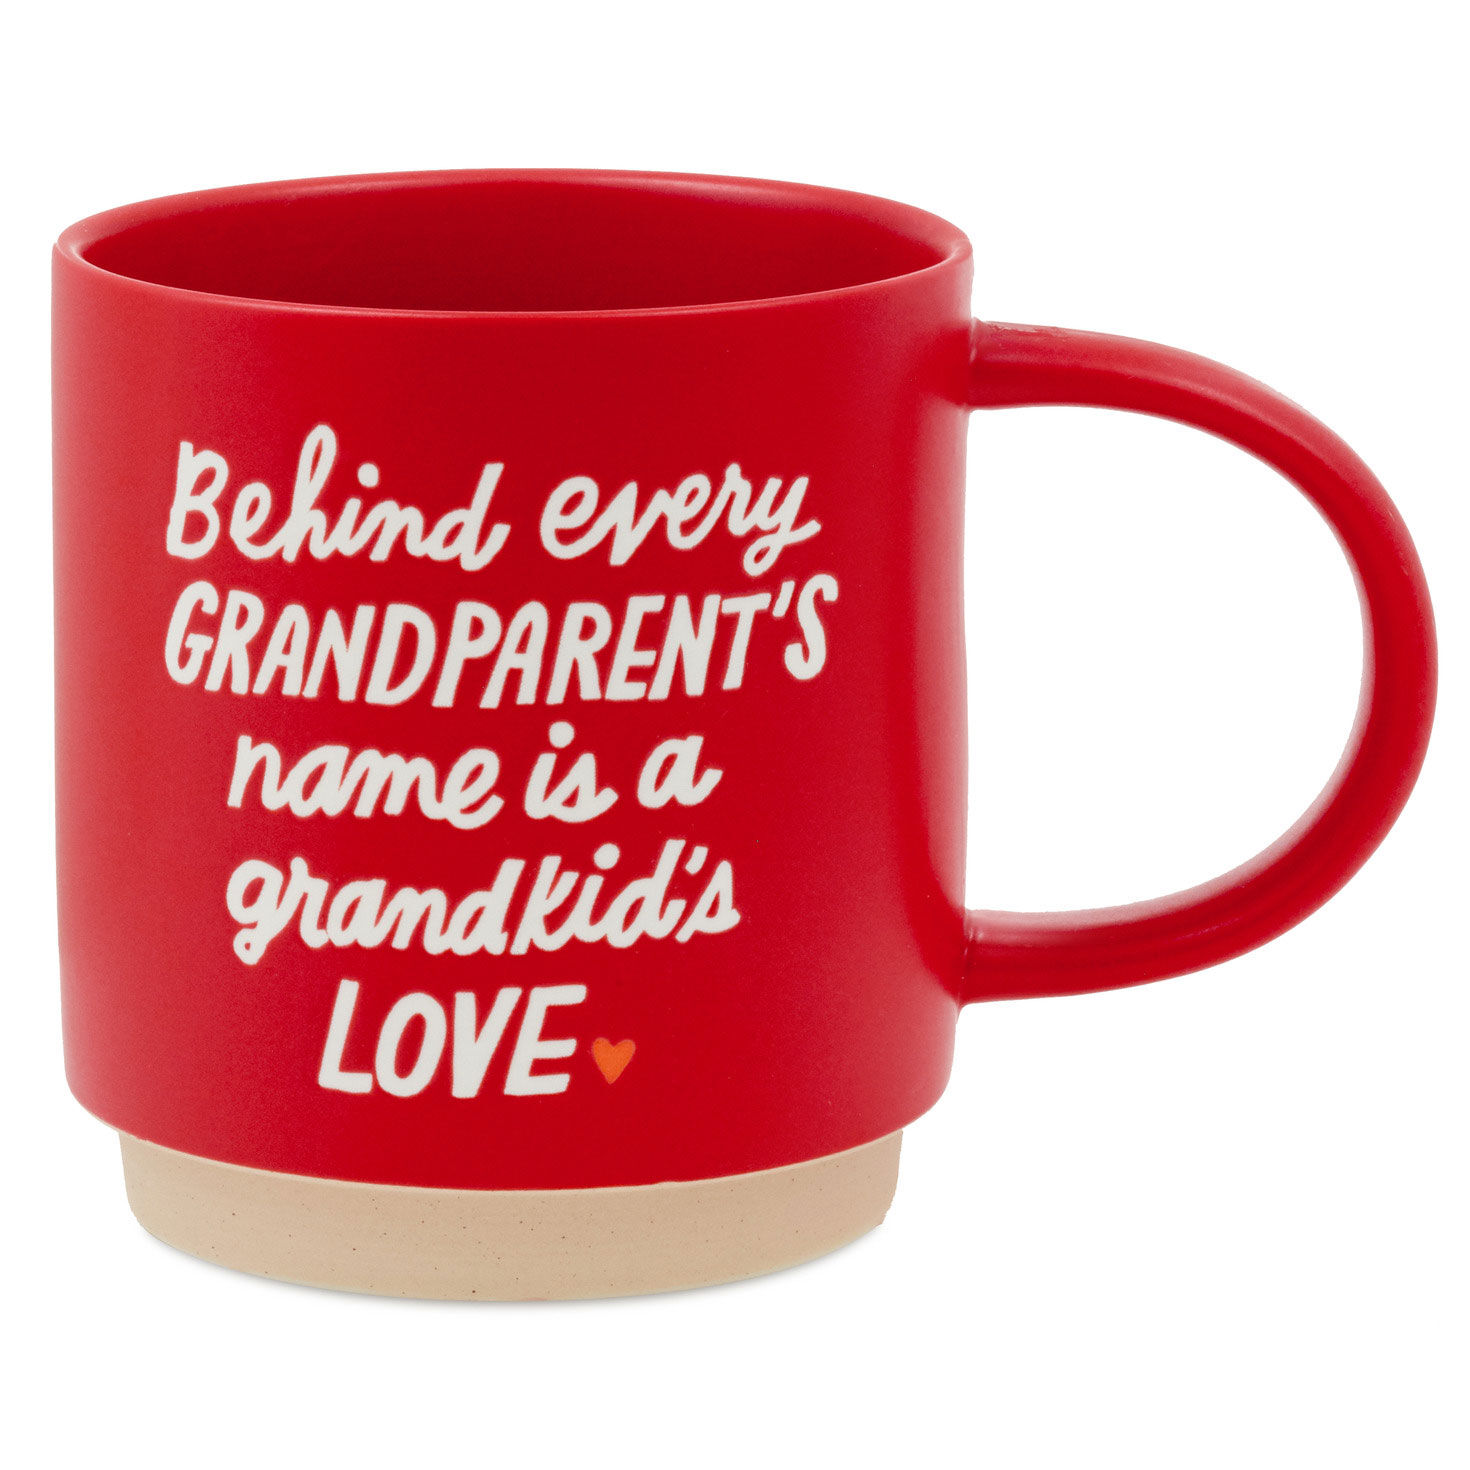 A Grandkid's Love Mug, 16 oz. for only USD 16.99 | Hallmark